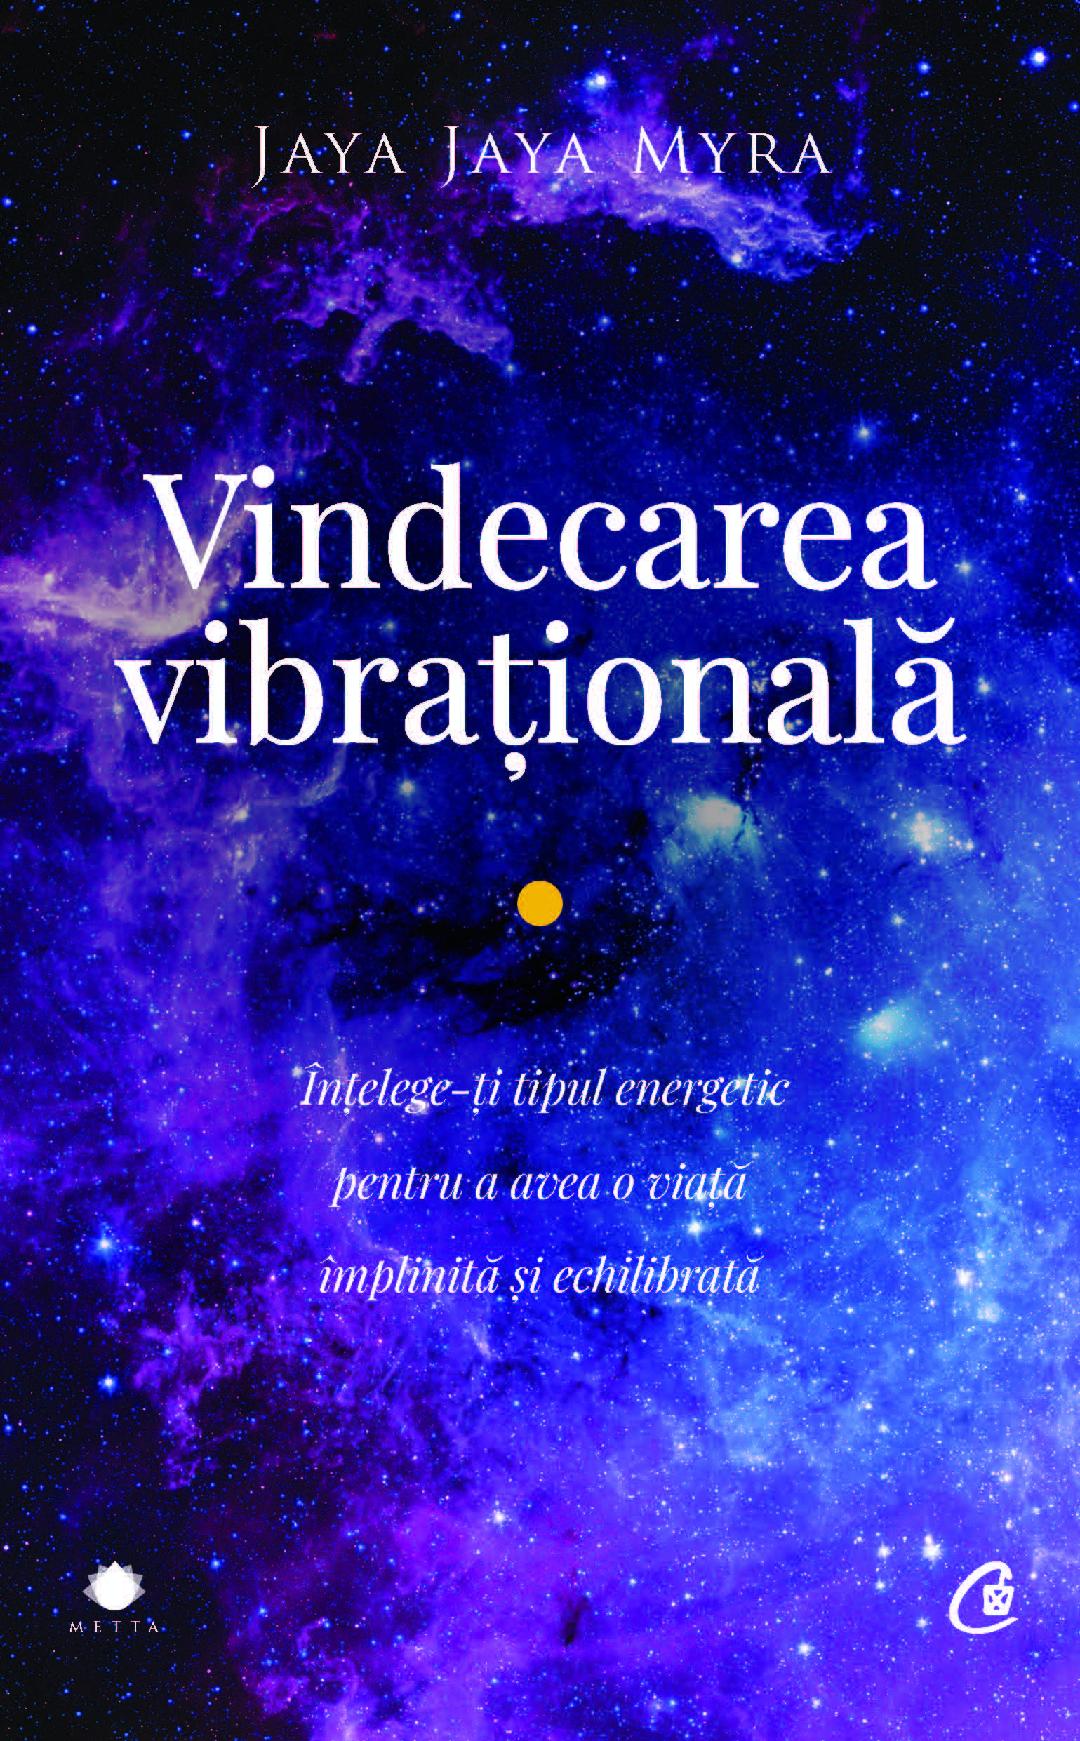 Vindecarea vibrationala Ed.2 - Jaya Jaya Myra